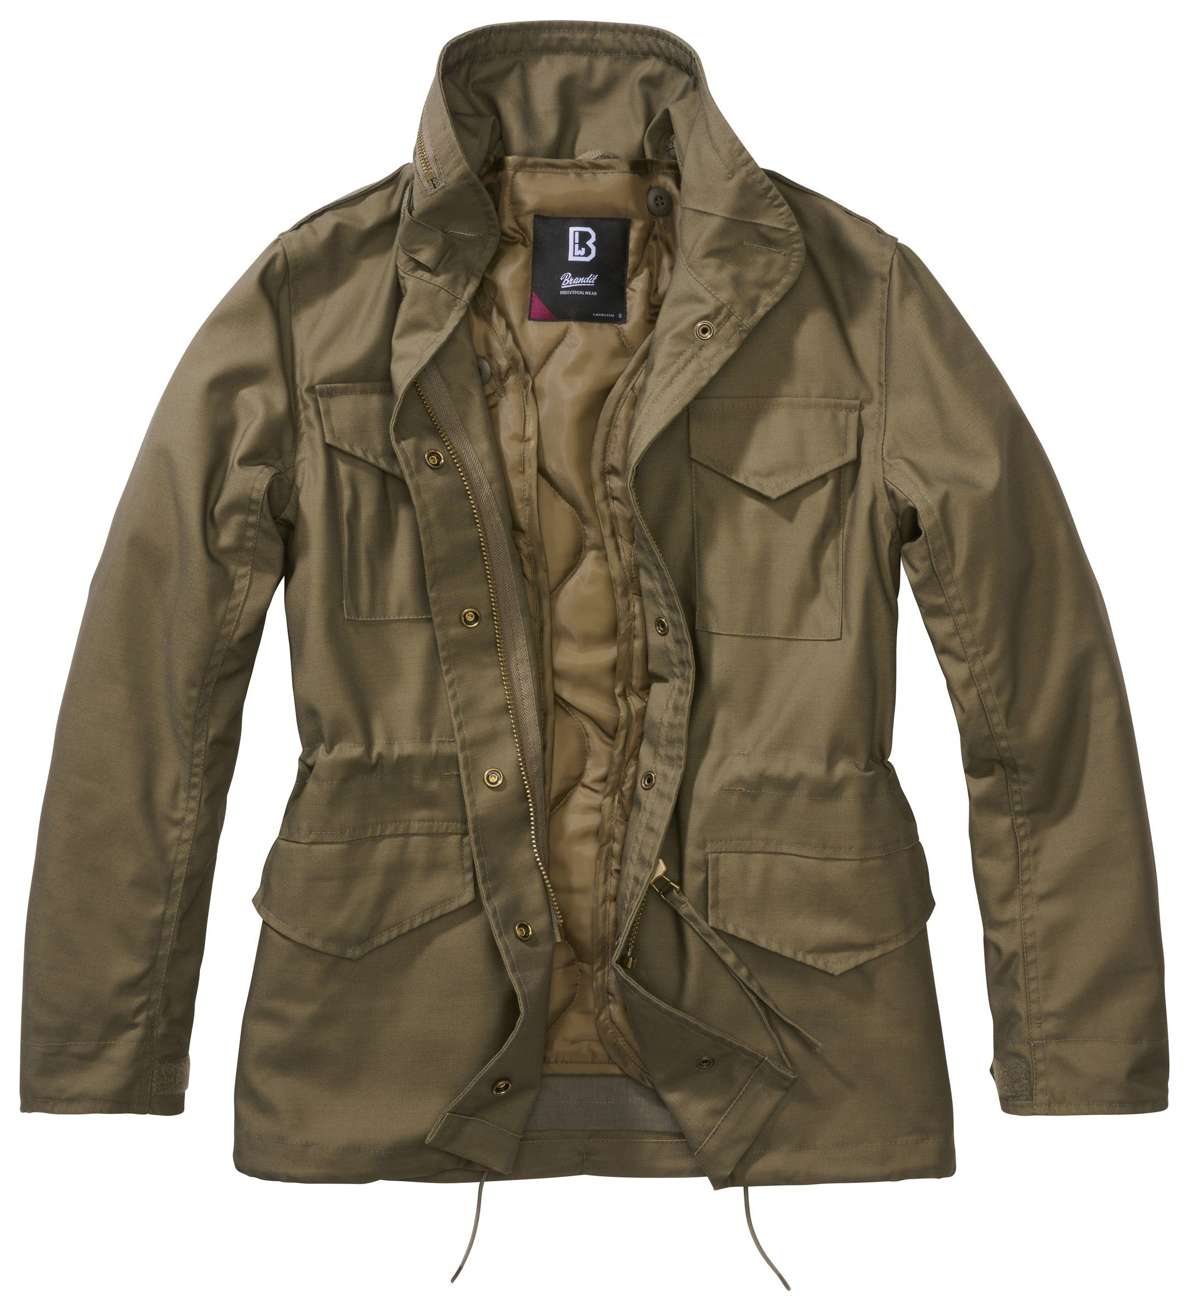 Парка женская женская стандартная куртка M65 (1 шт.)